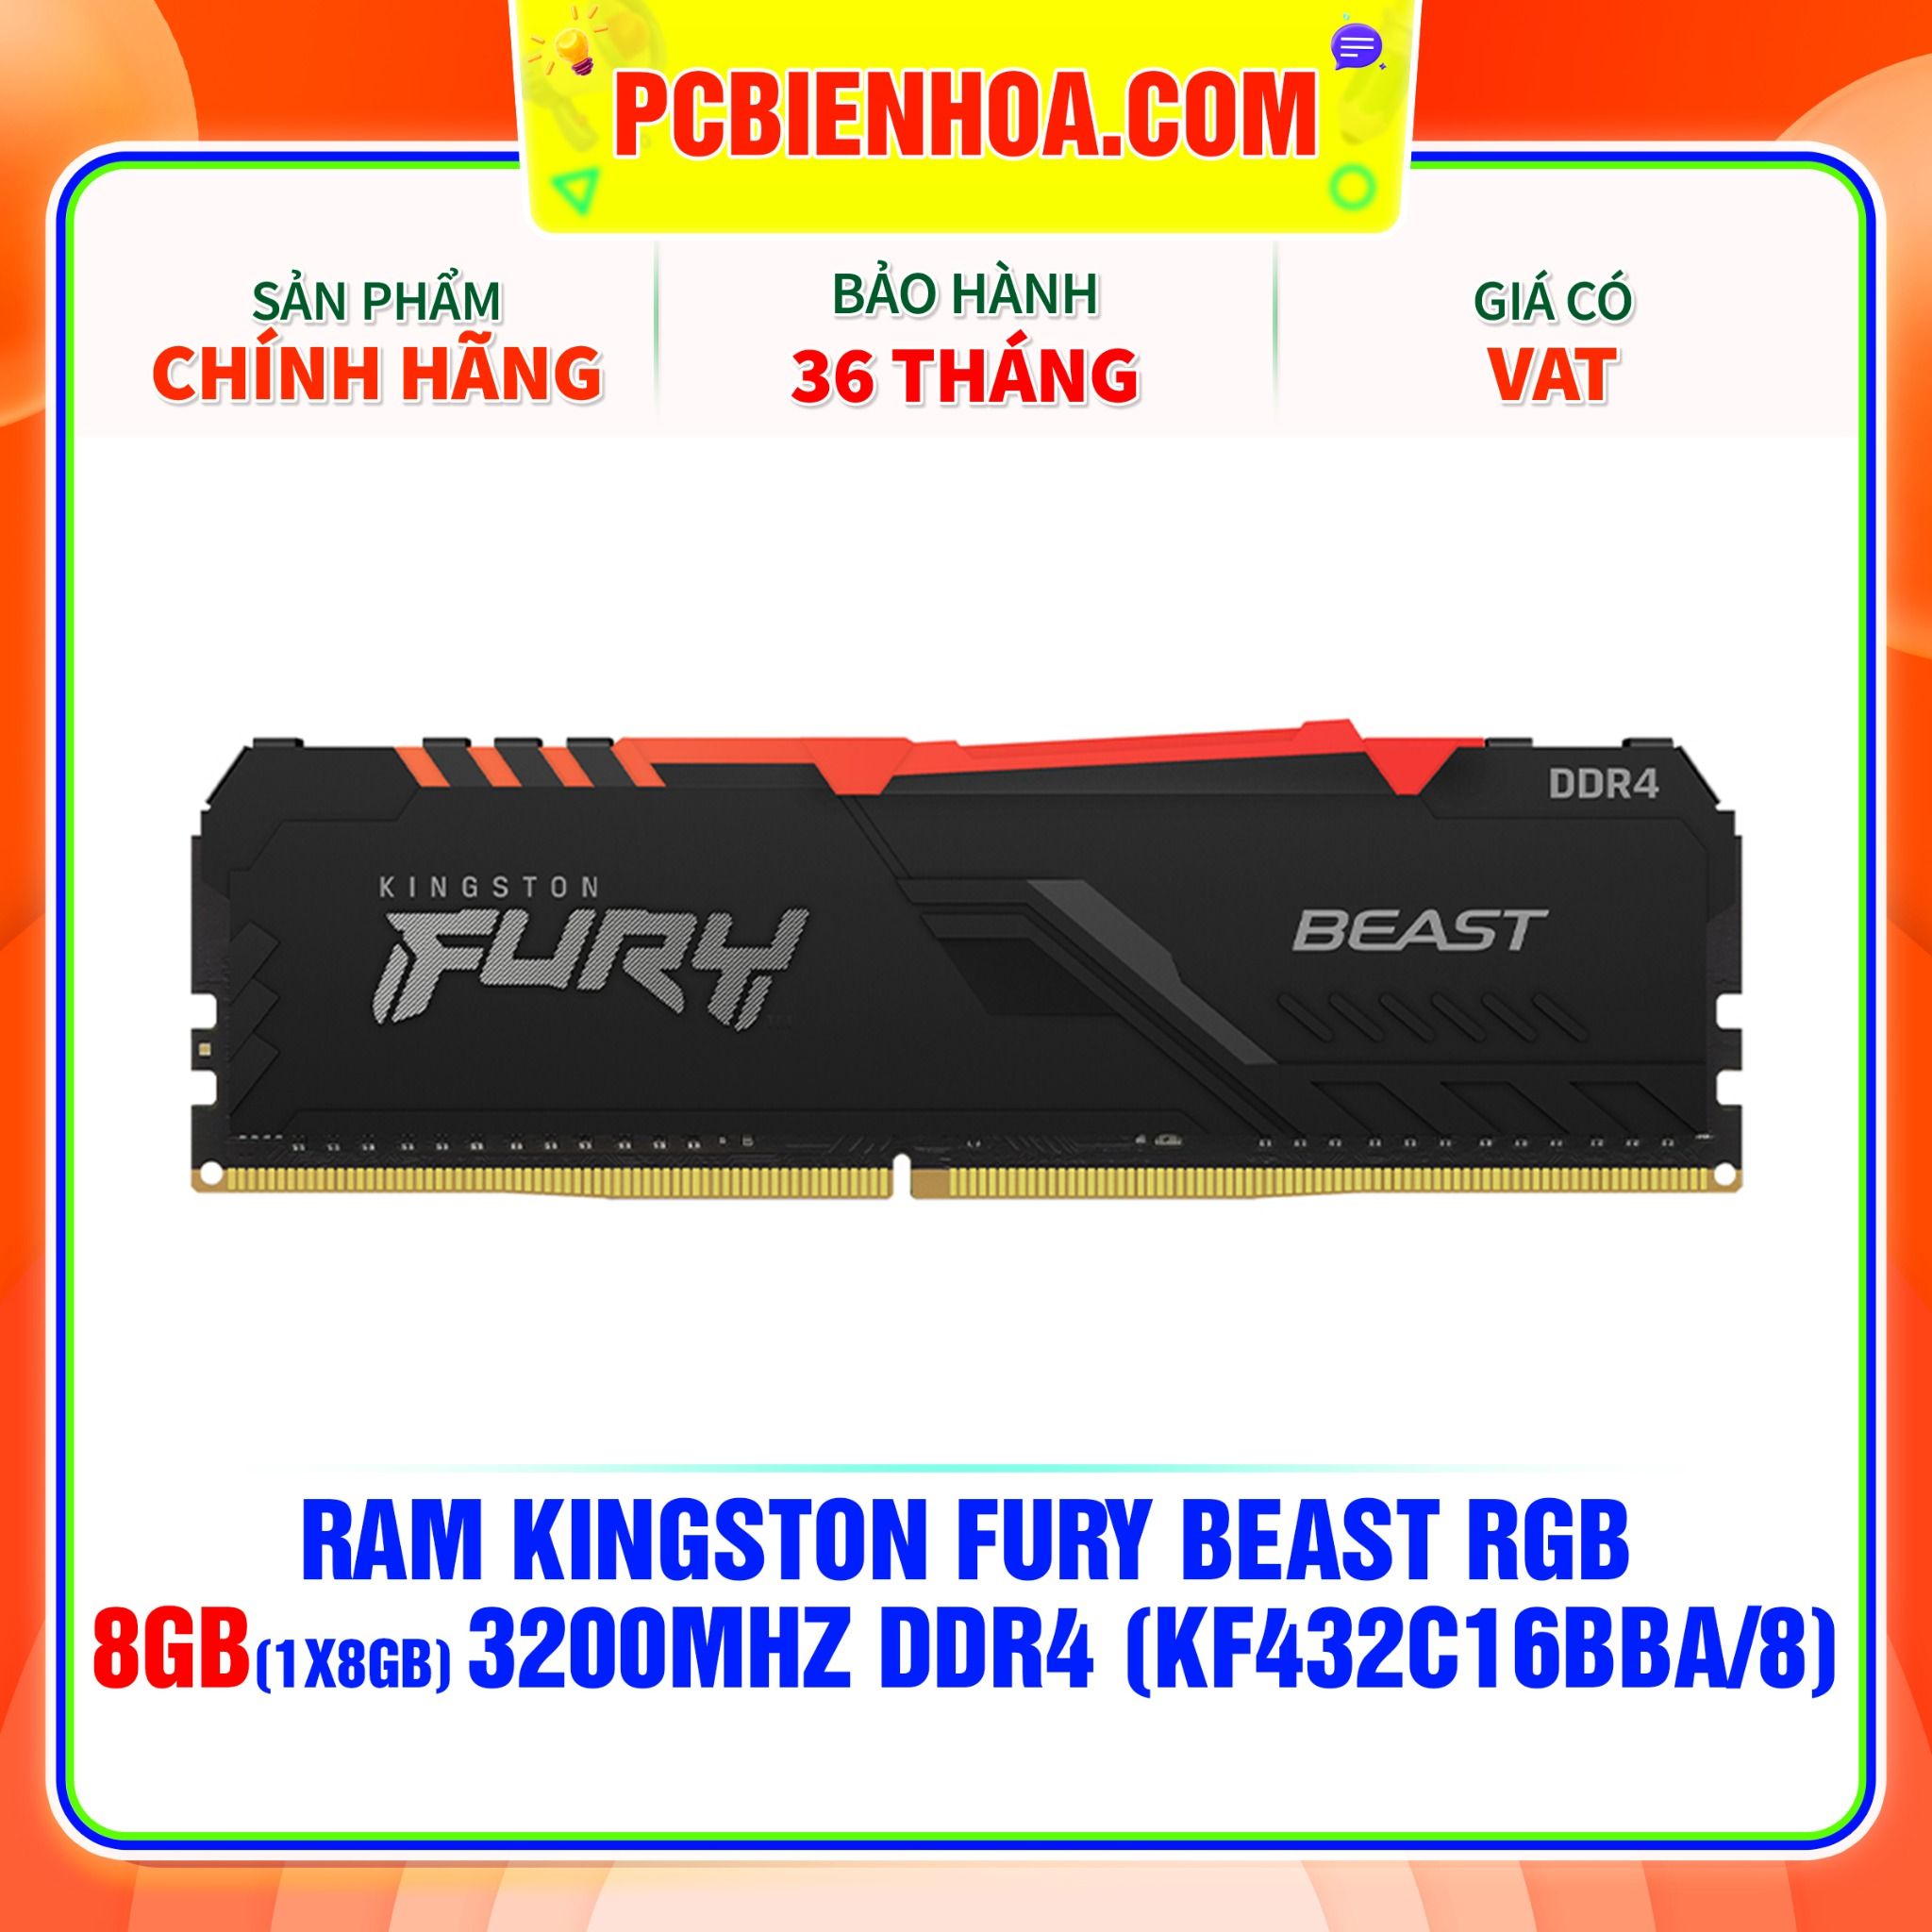  RAM KINGSTON FURY BEAST RGB 8GB (1x8GB) 3200MHz DDR4 ( KF432C16BBA/8 ) 